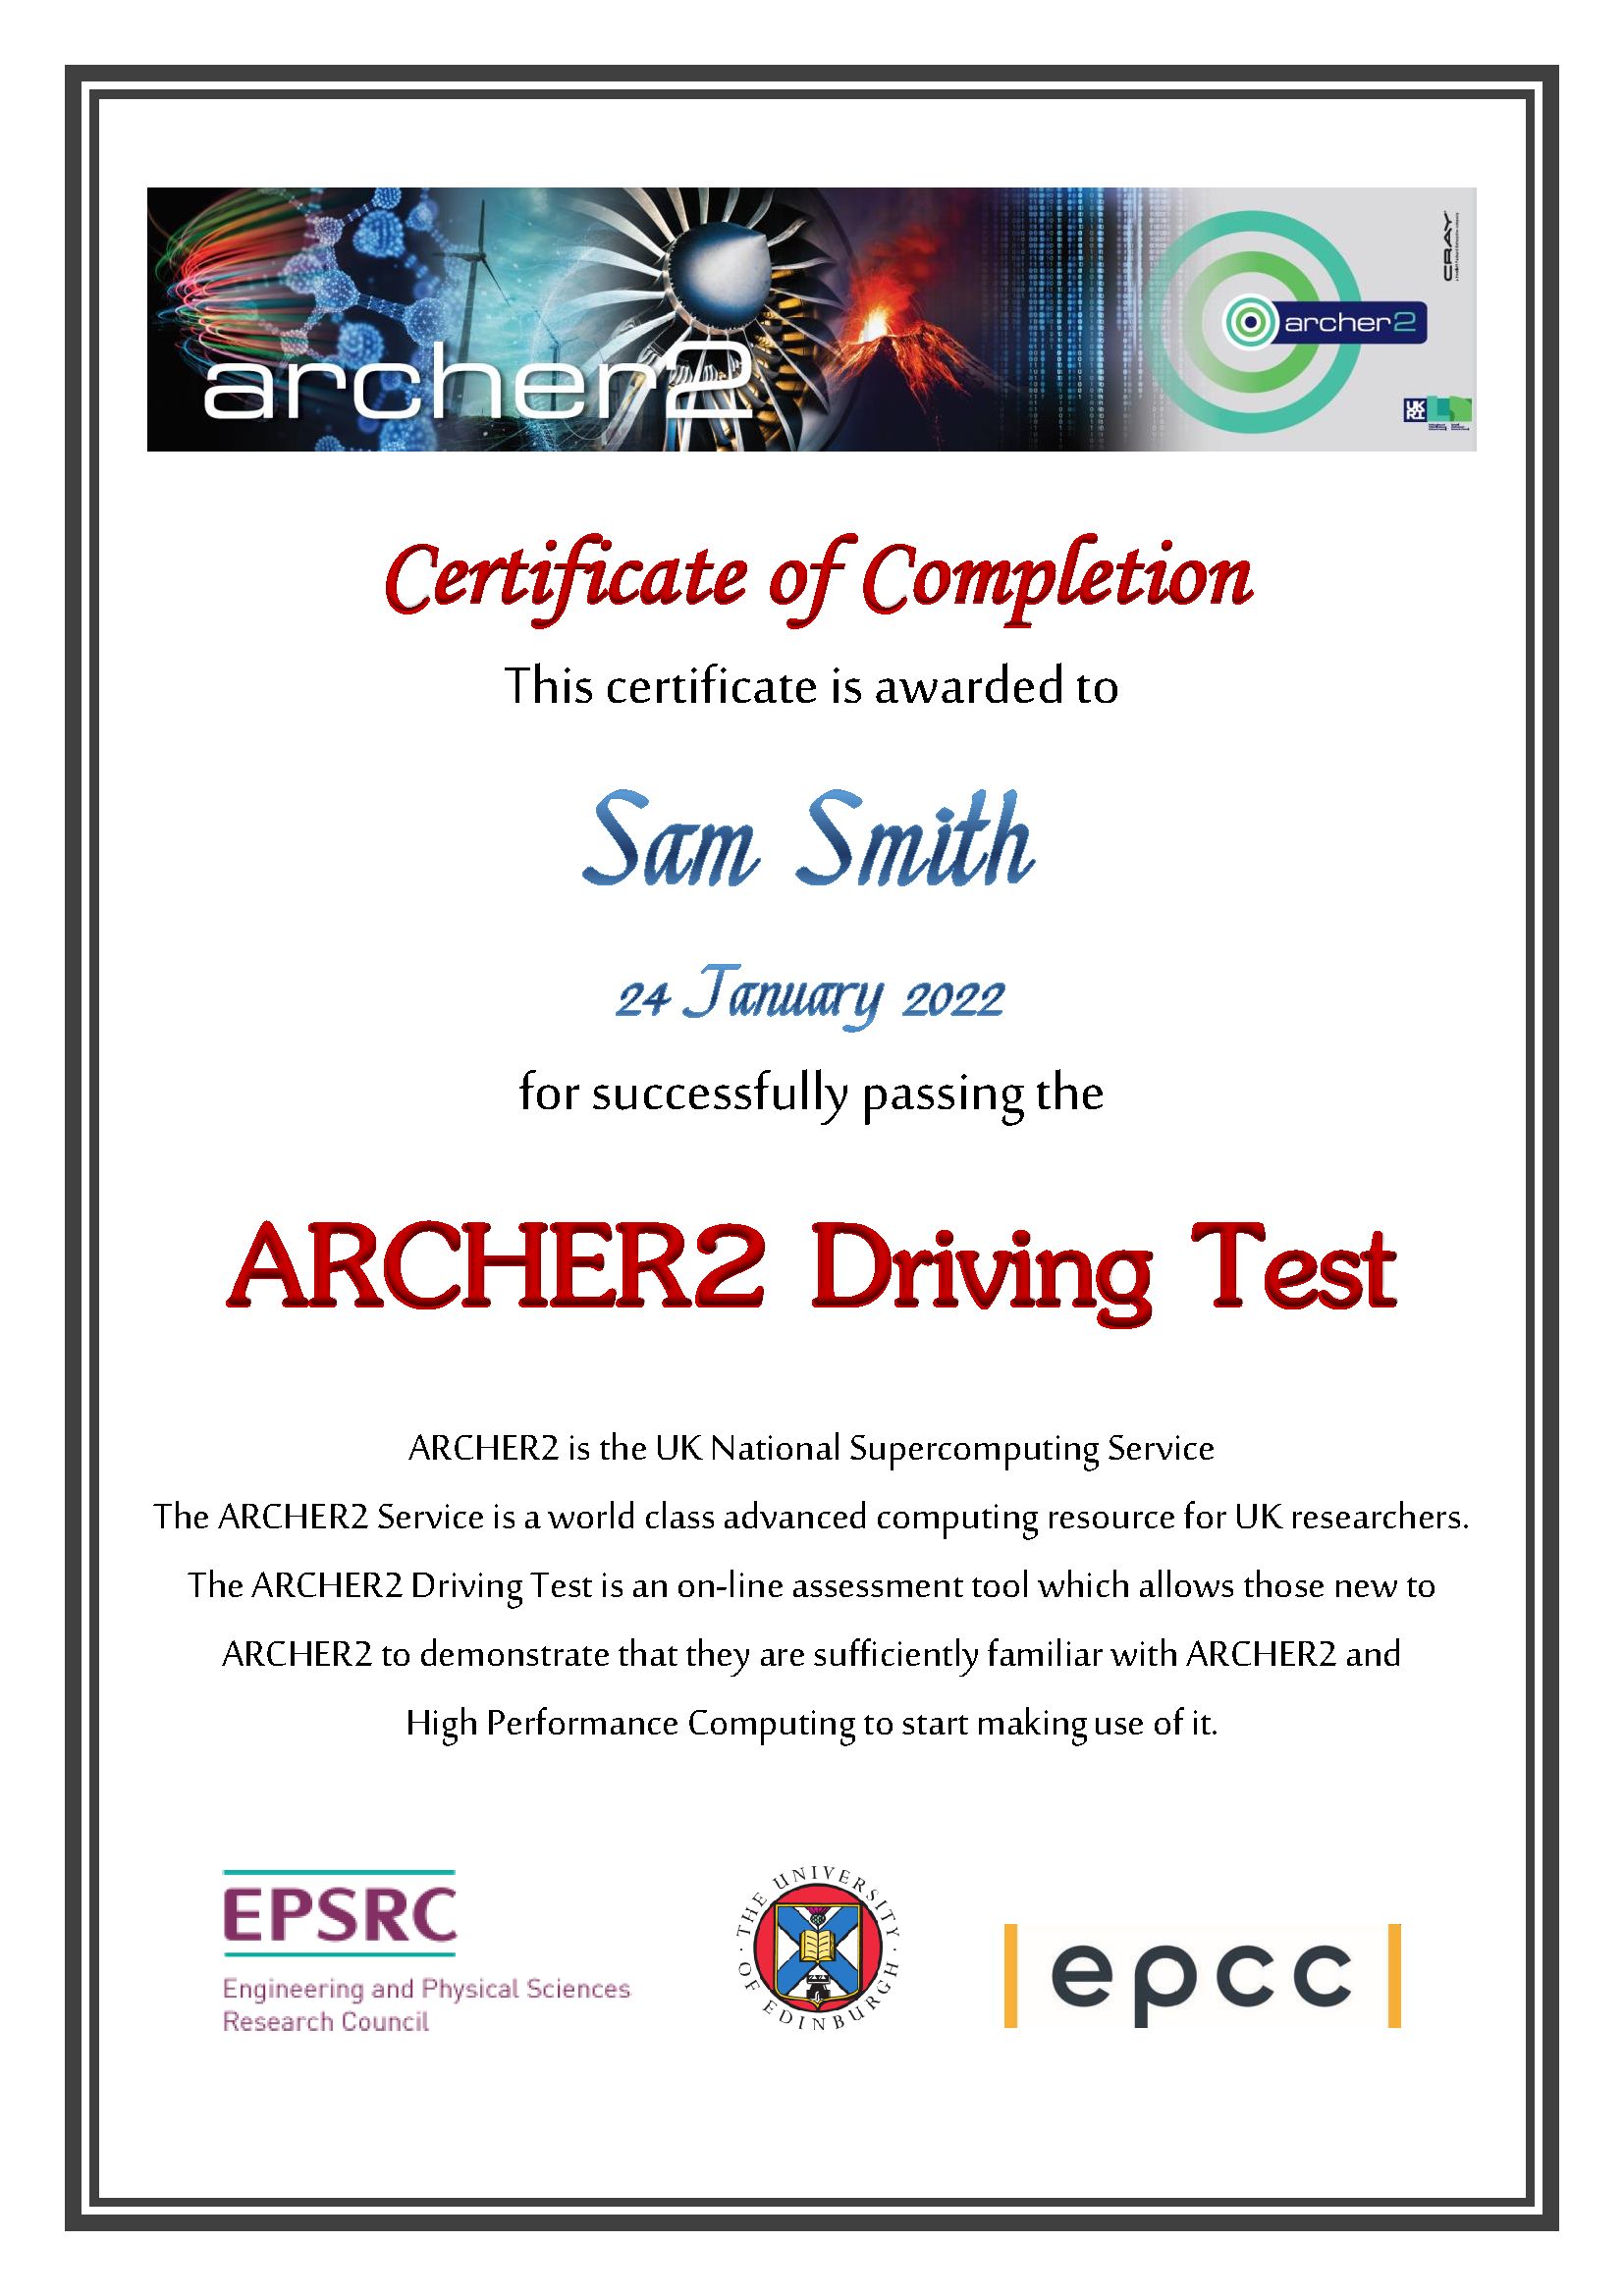 ARCHER2 Driving Test Certificate